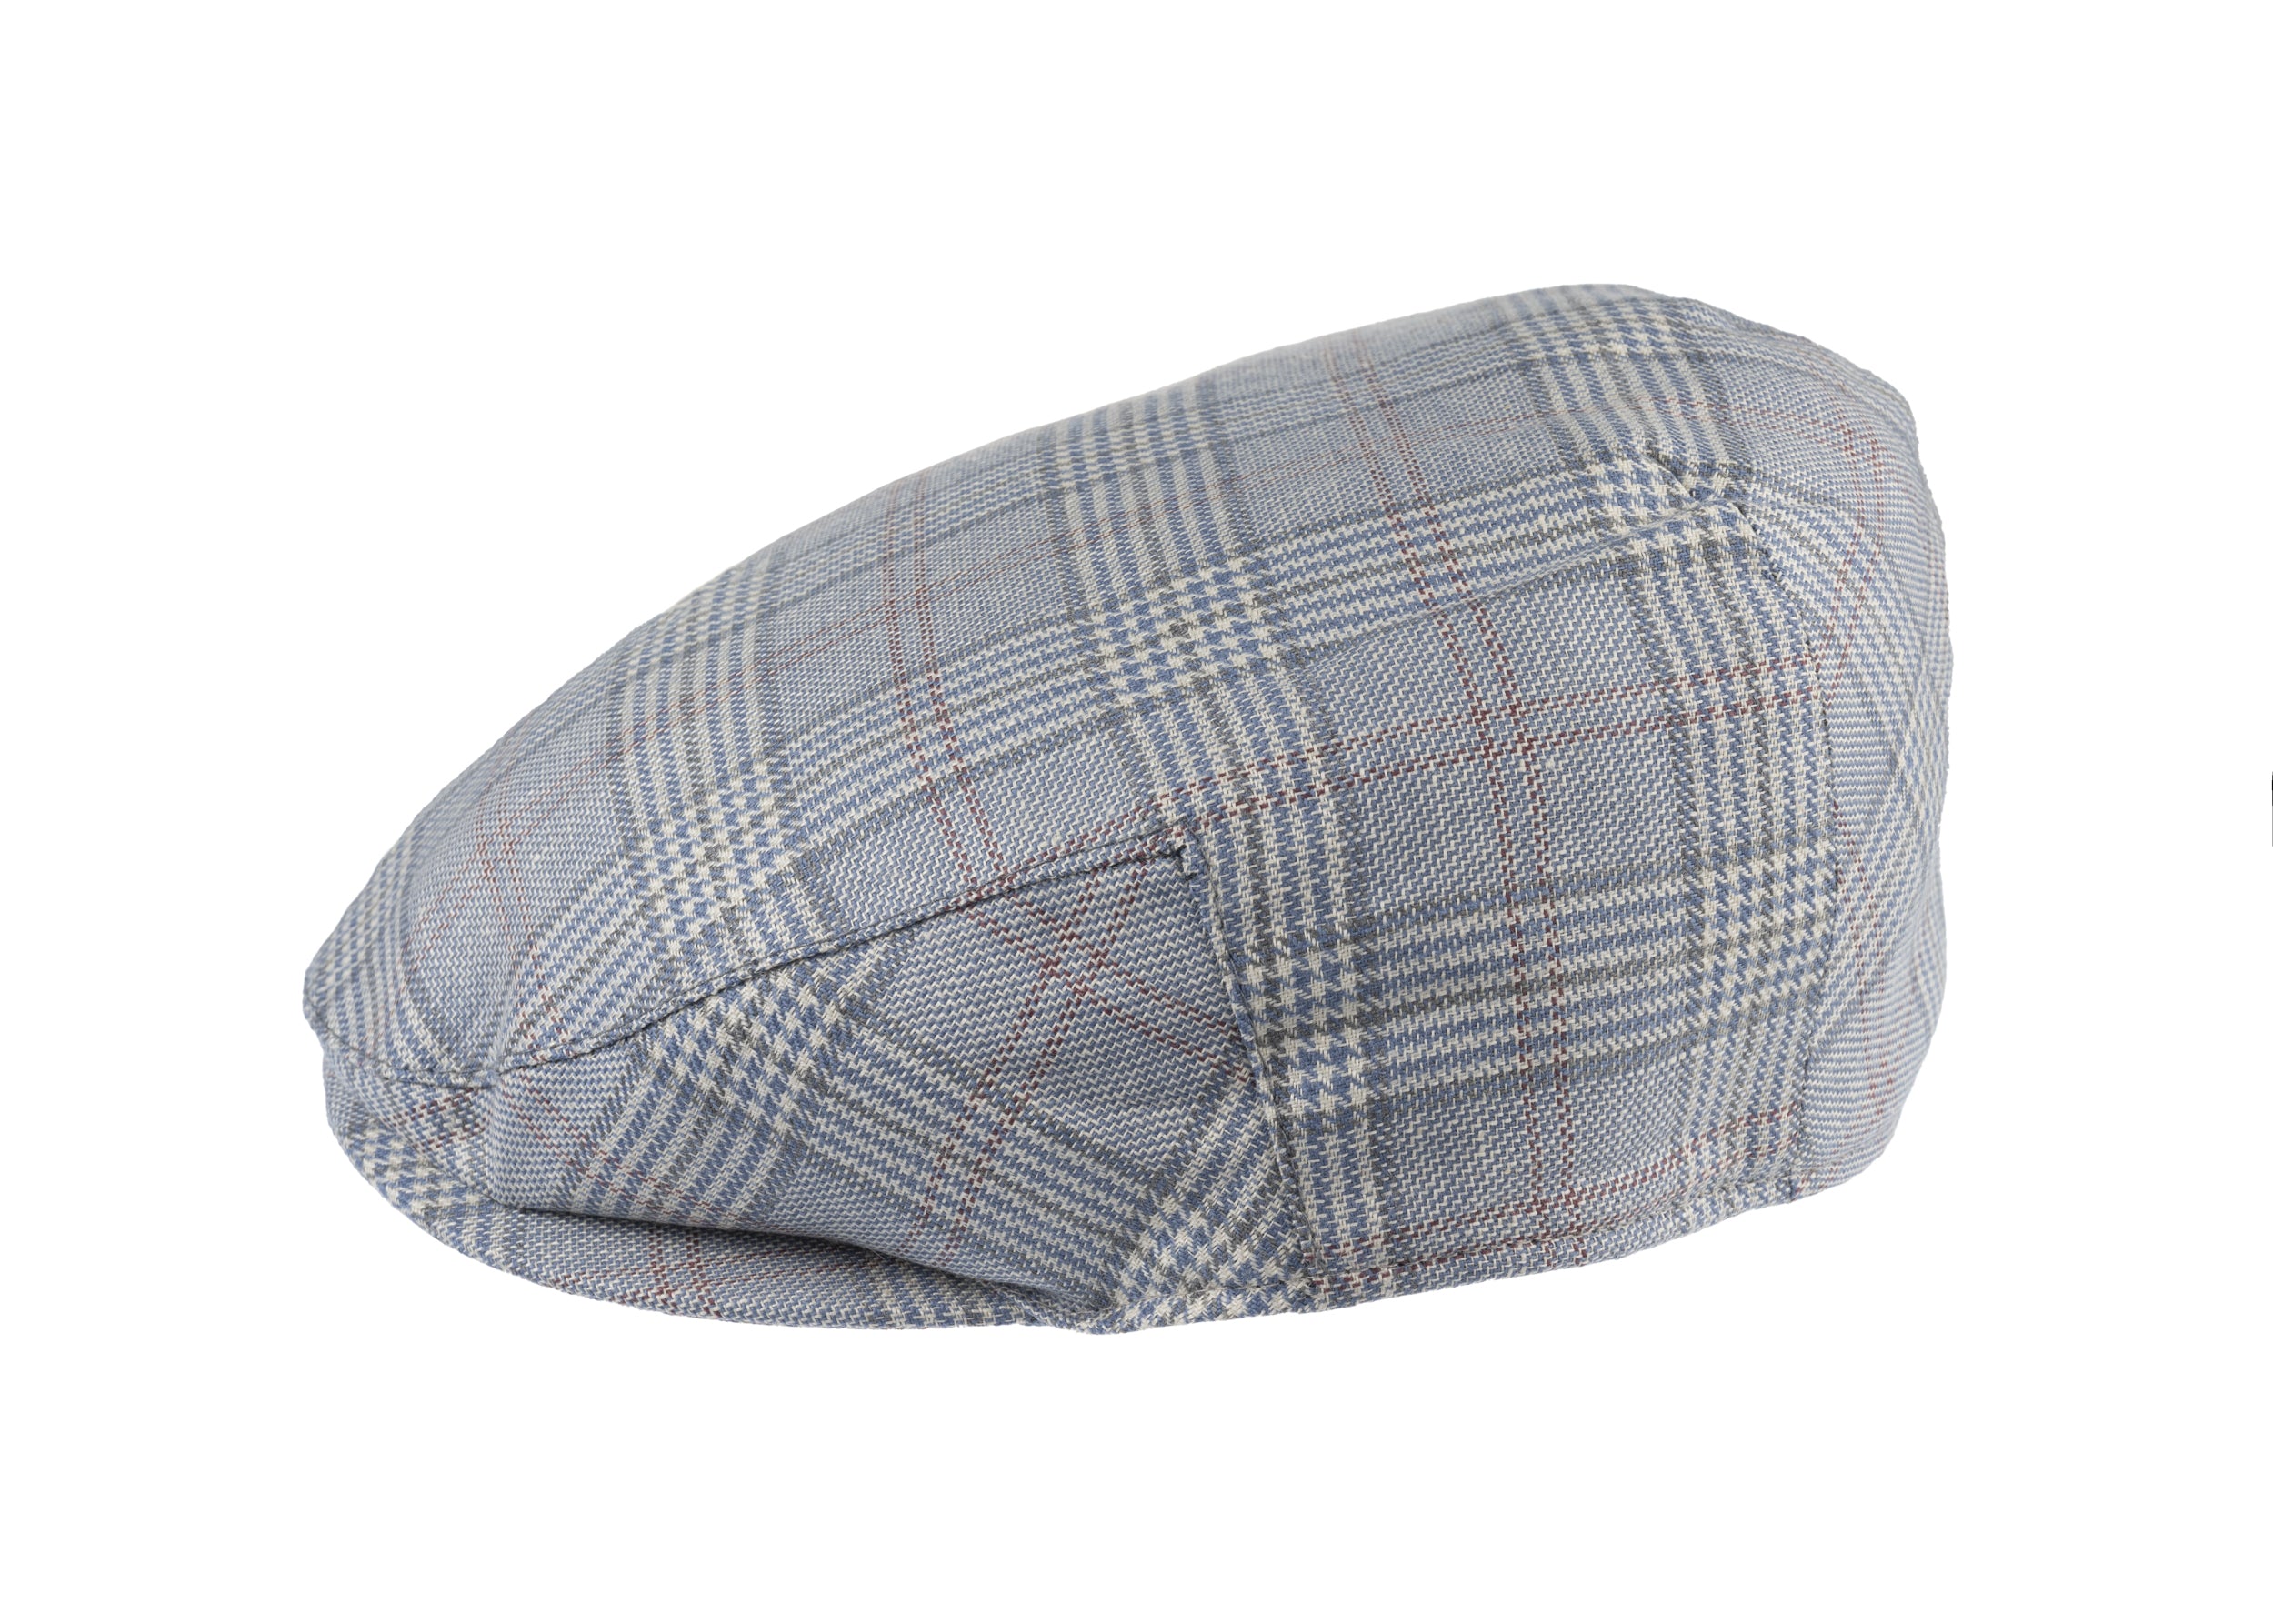 Balmoral flat cap in wool/linen fabric